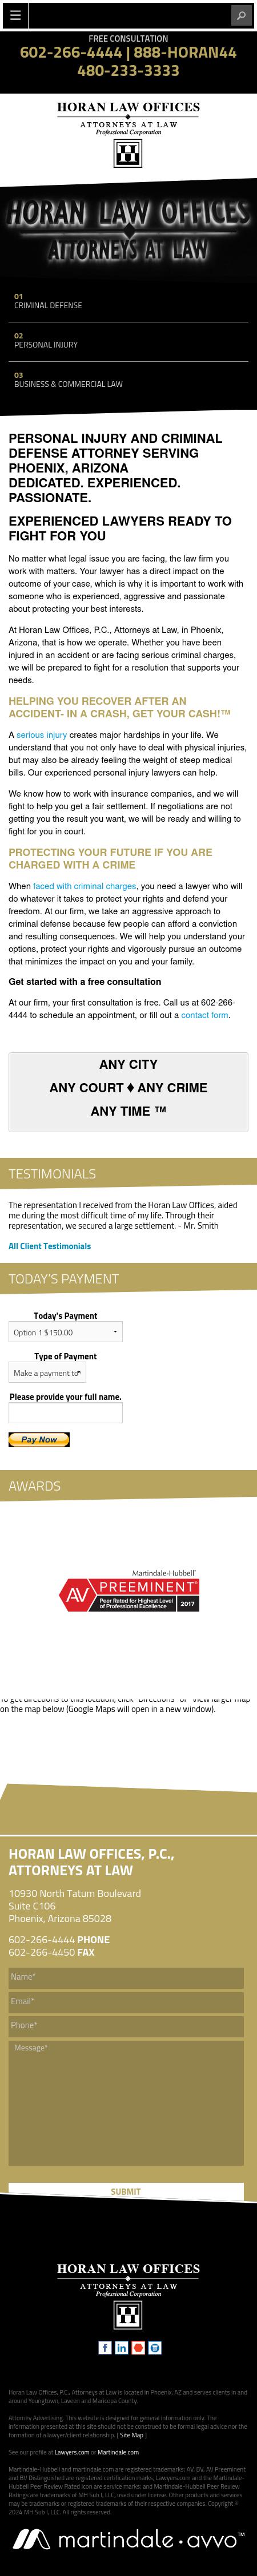 Horan Law Offices PC - Phoenix AZ Lawyers